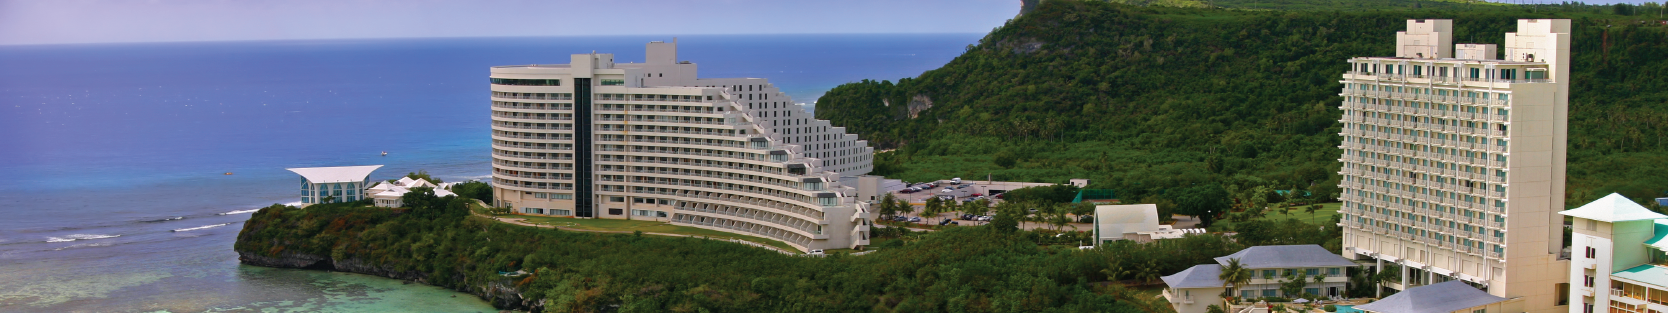 Hotels on Guam